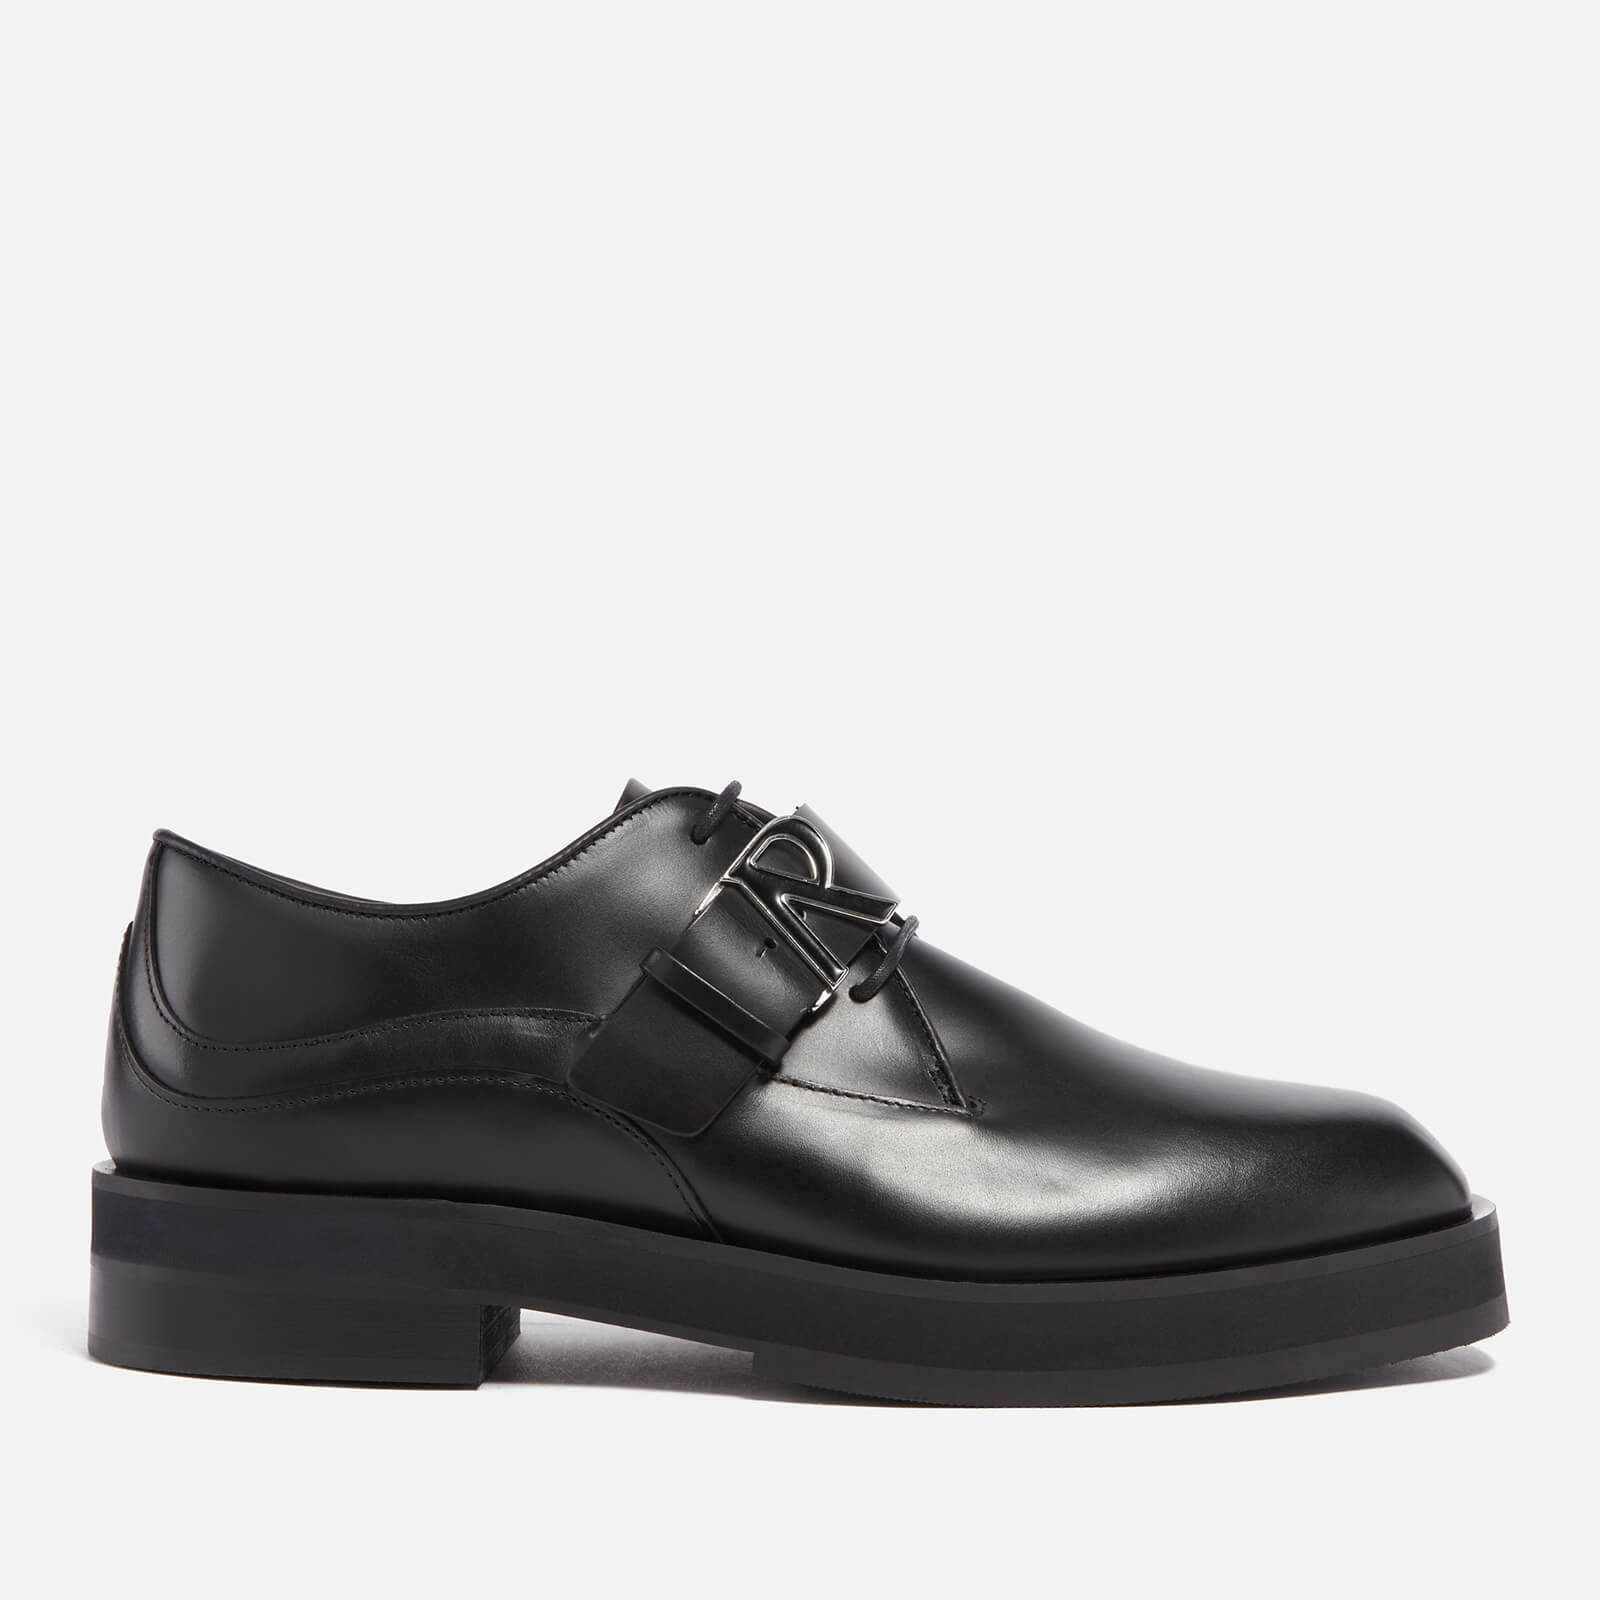 Represent Mens Derby Shoes - Black - UK 7